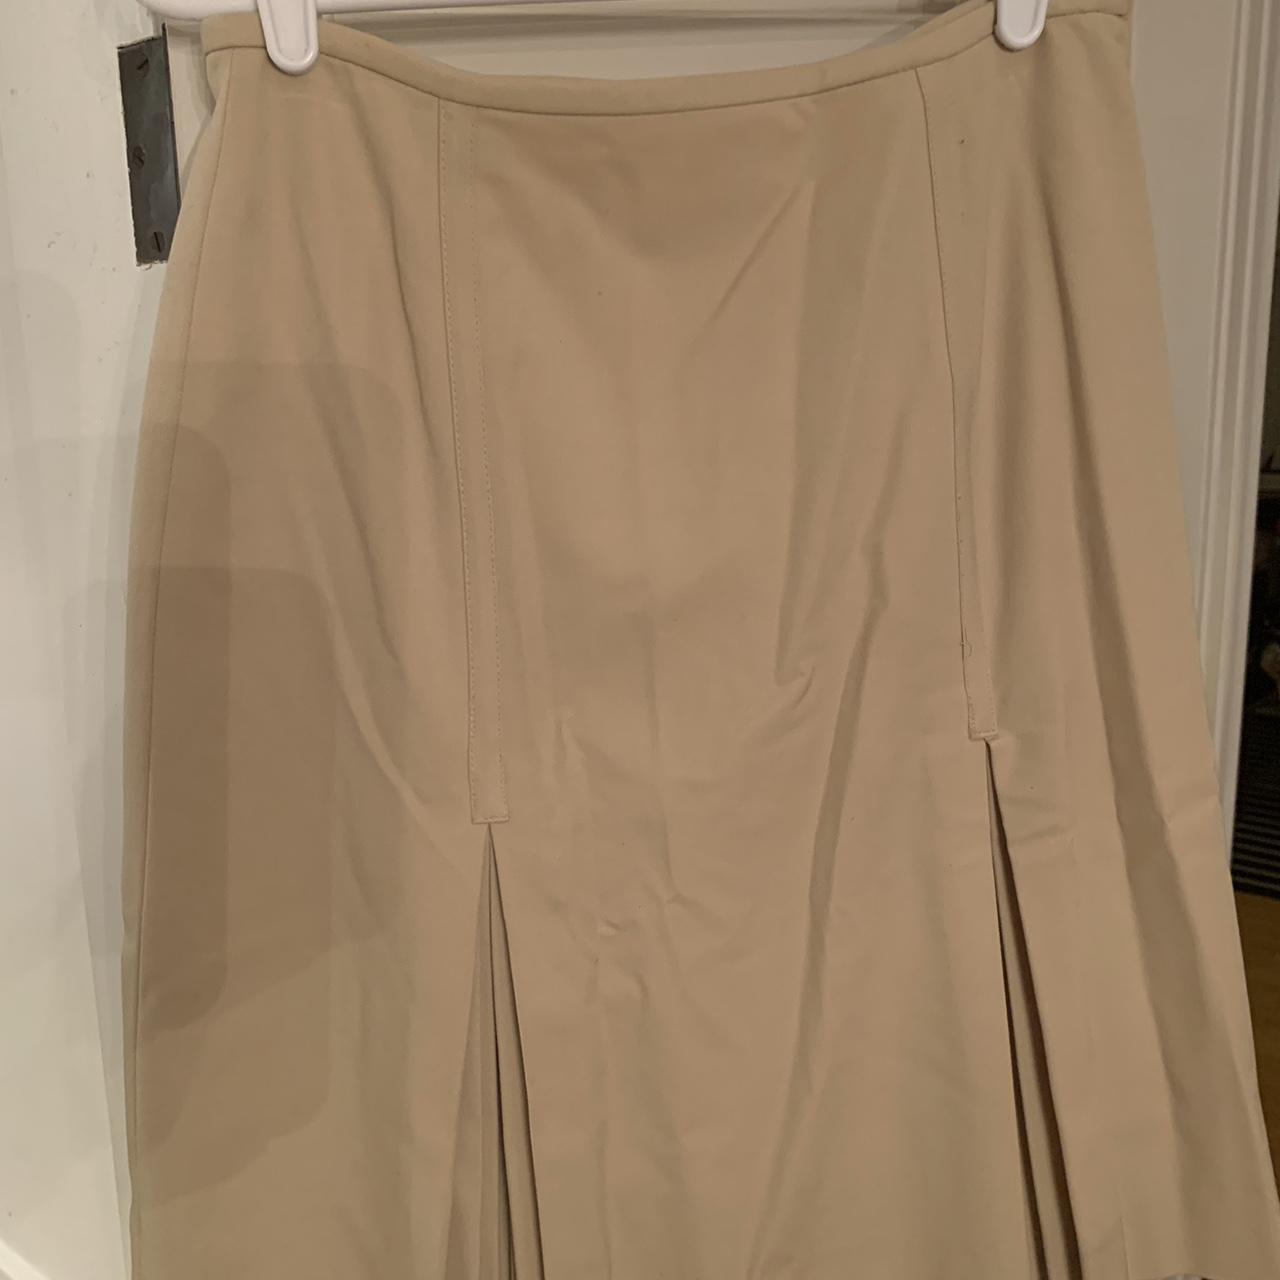 Anne Klein Women's Tan Skirt (2)